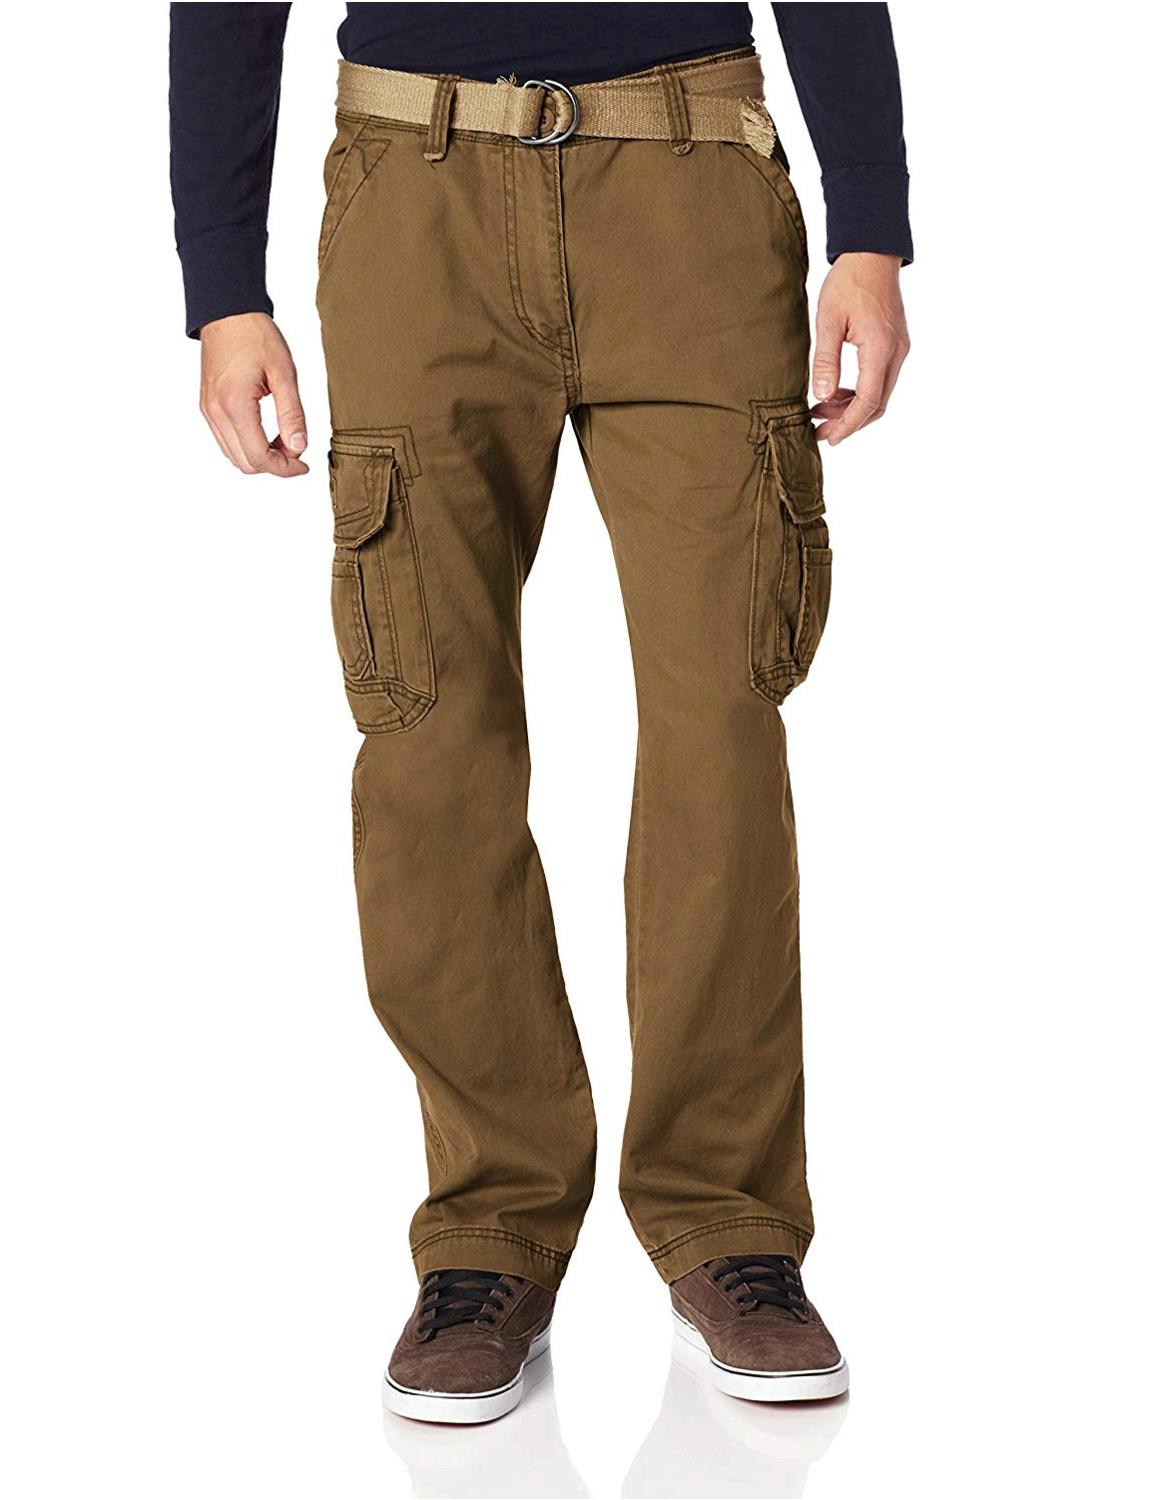 Unionbay Men's Survivor Iv Relaxed Fit Cargo Pant, Golden Brown, Size ...